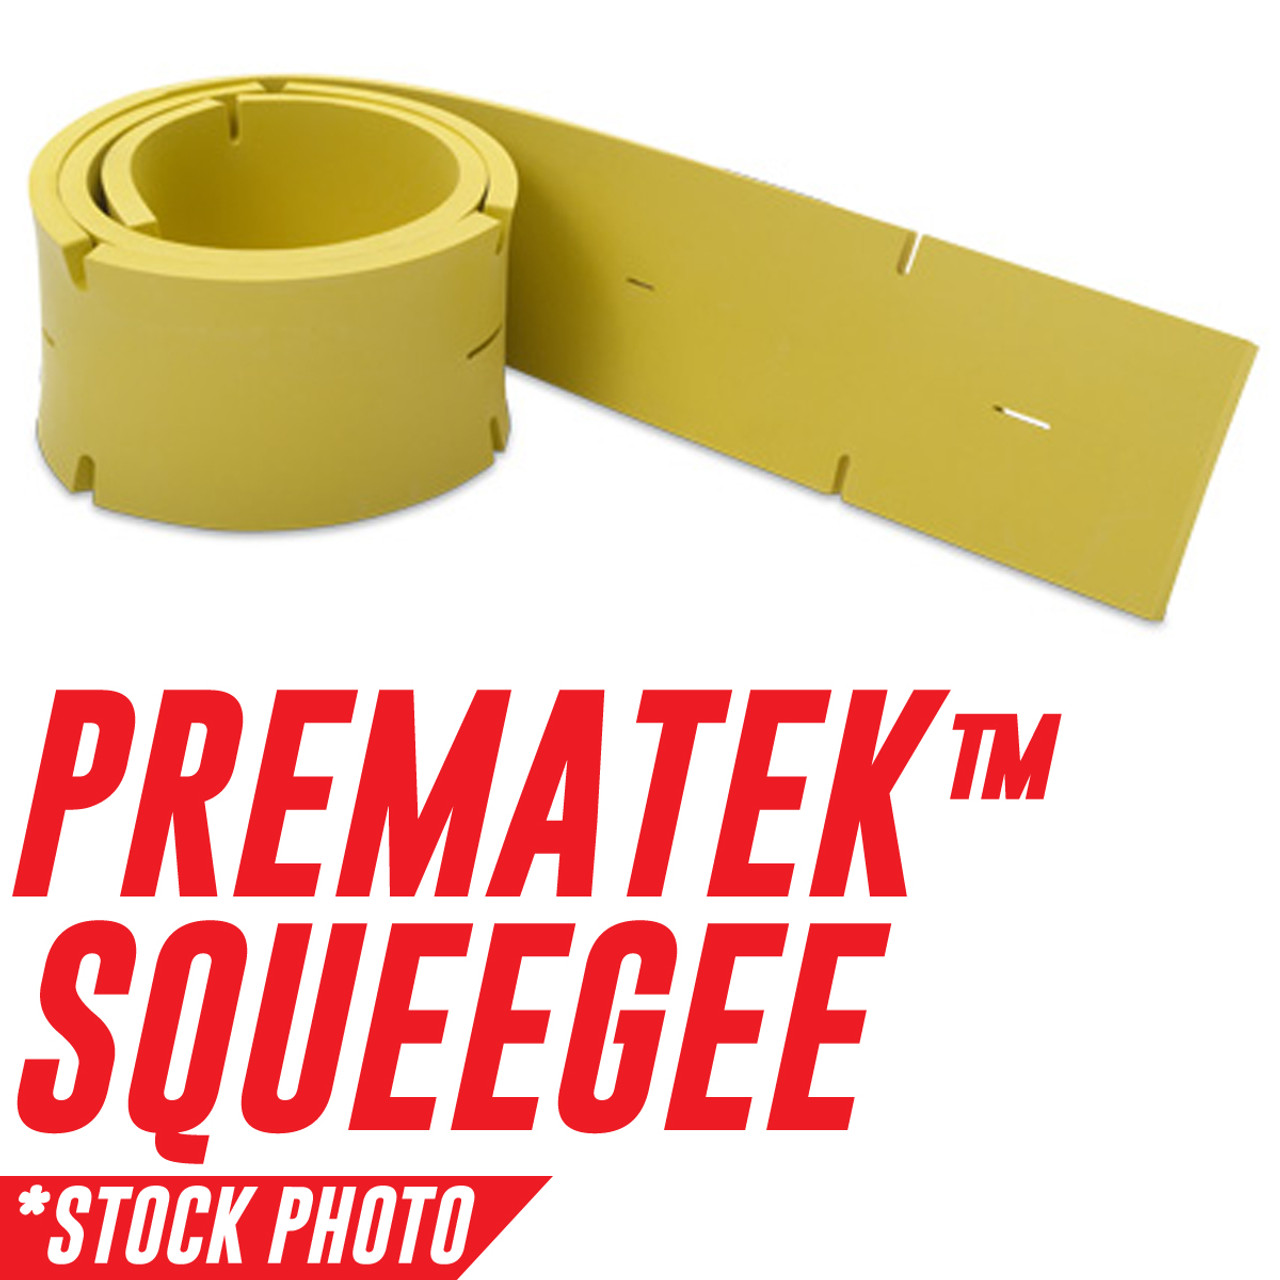 630288: Squeegee, Front, Tile, Prematek fits Tennant Models 5280